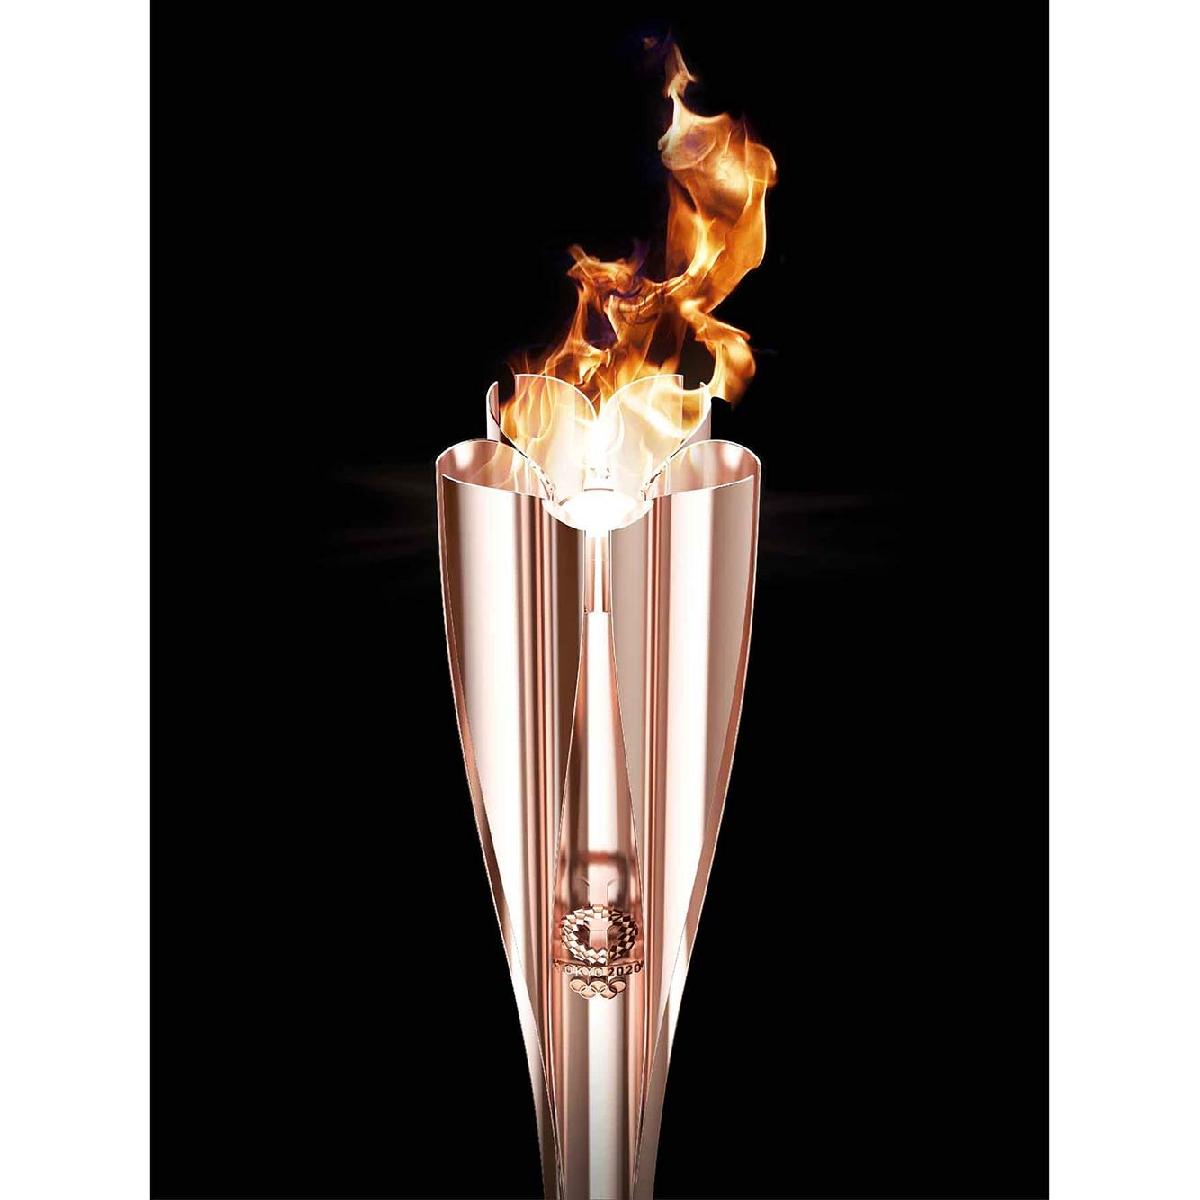 Токио-2020. Представлен олимпийский факел и эмблема эстафеты олимпийского огня